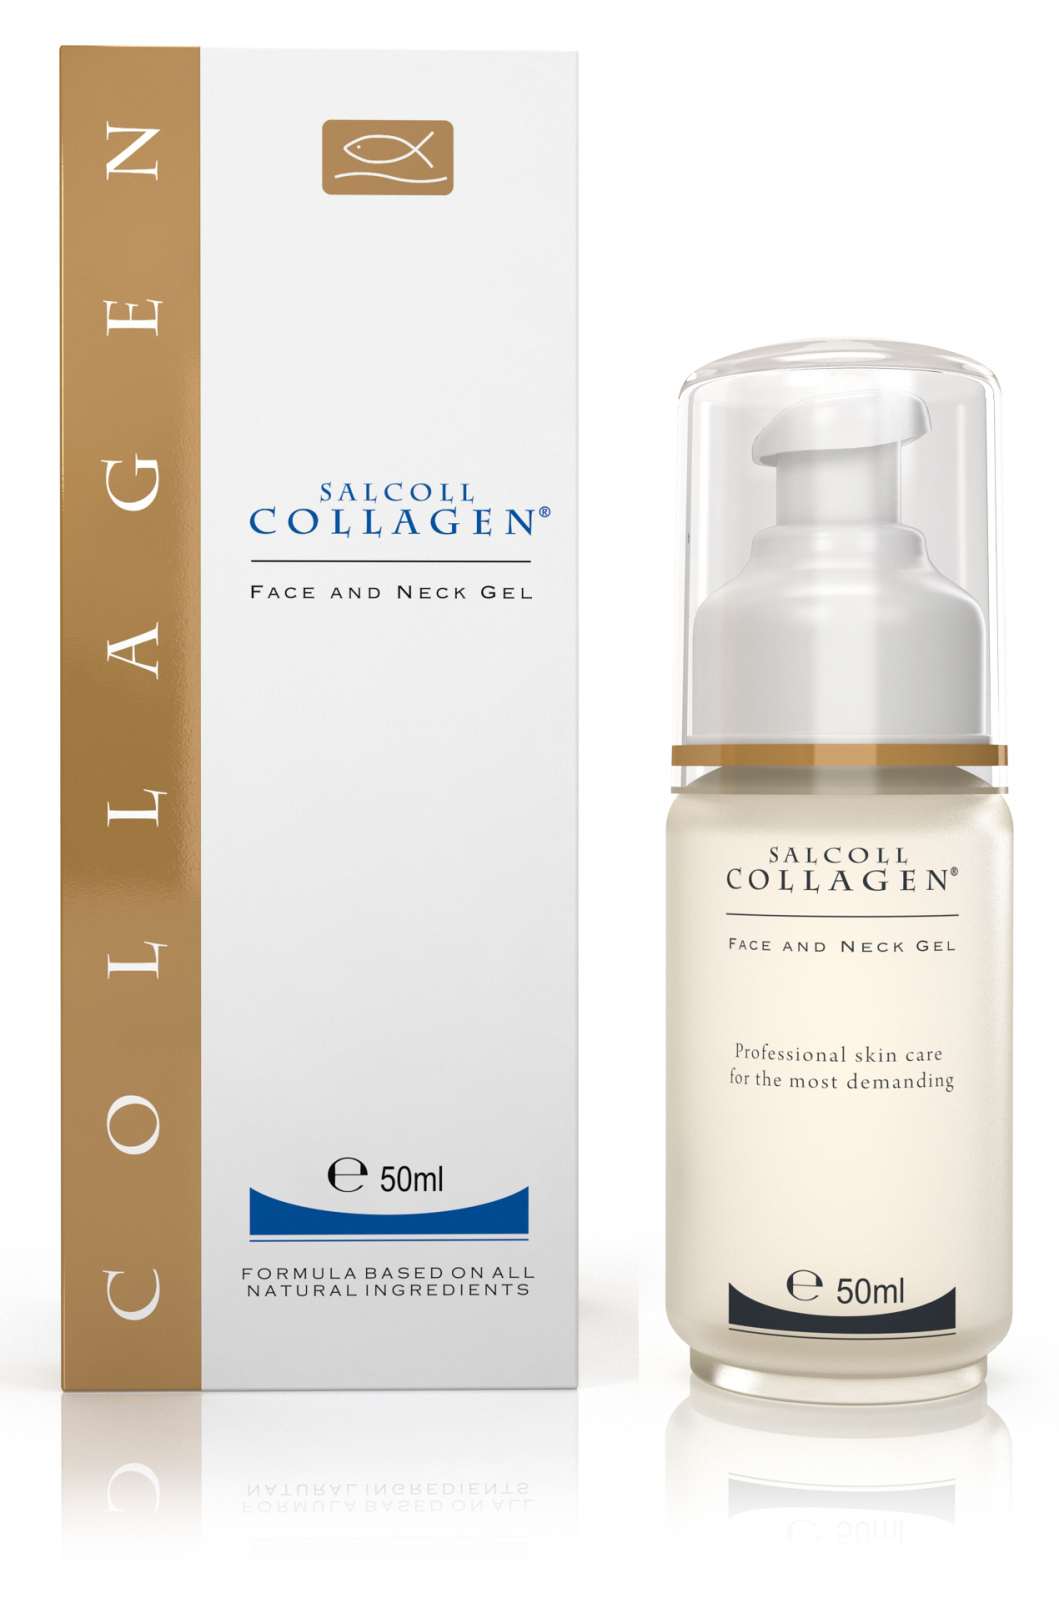 Salcoll Collagen Anti-Aging Anti-Wrinkle Face & Neck Gel to Regenerate Skin - 50 ml - image 1 of 3